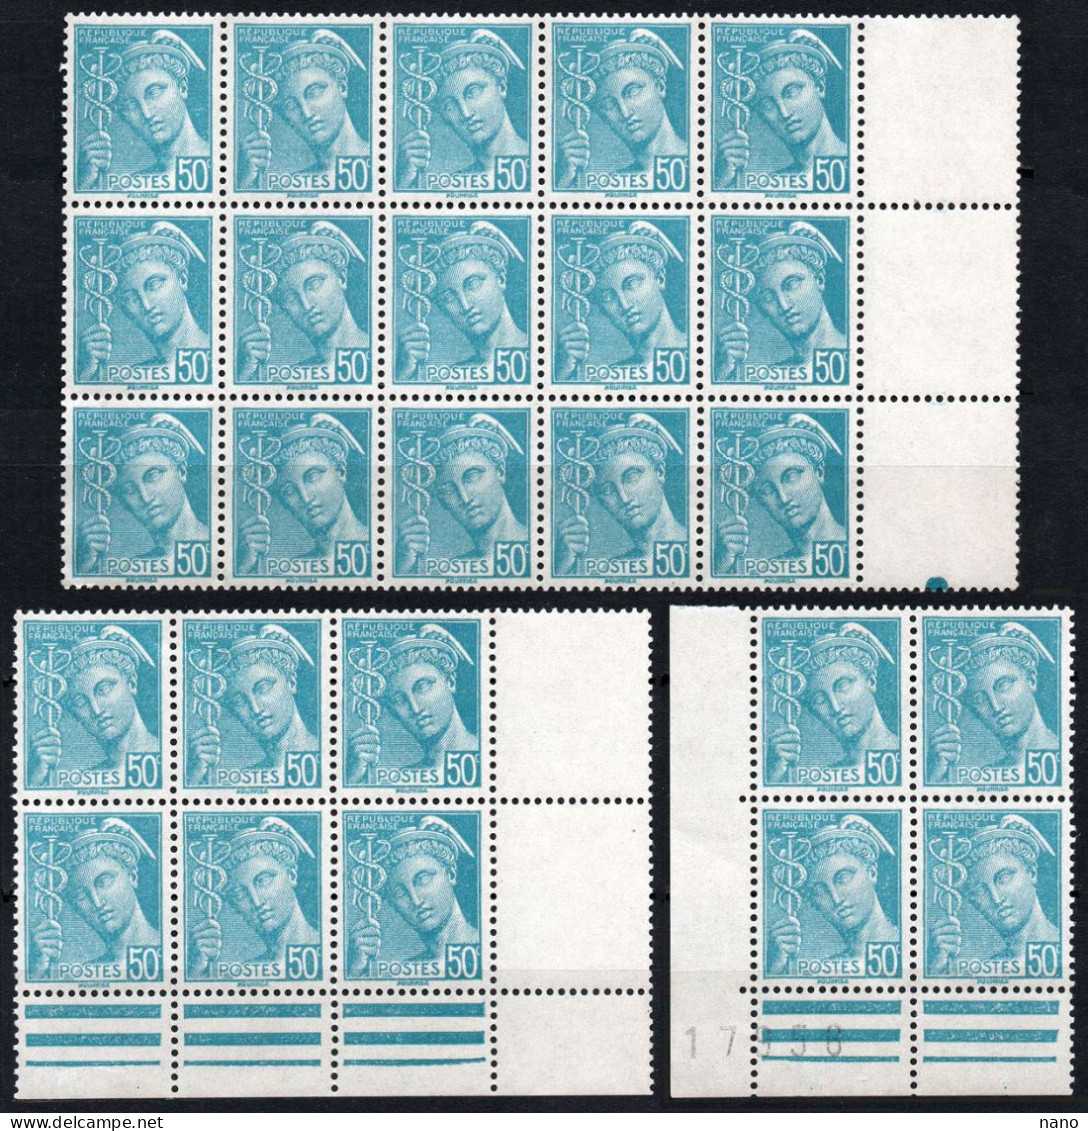 Y&T N° 538 - 50 C. Turquoise - Type Mercure - Année 1942 - 3 Blocs - Neuf ** - 1938-42 Mercurio